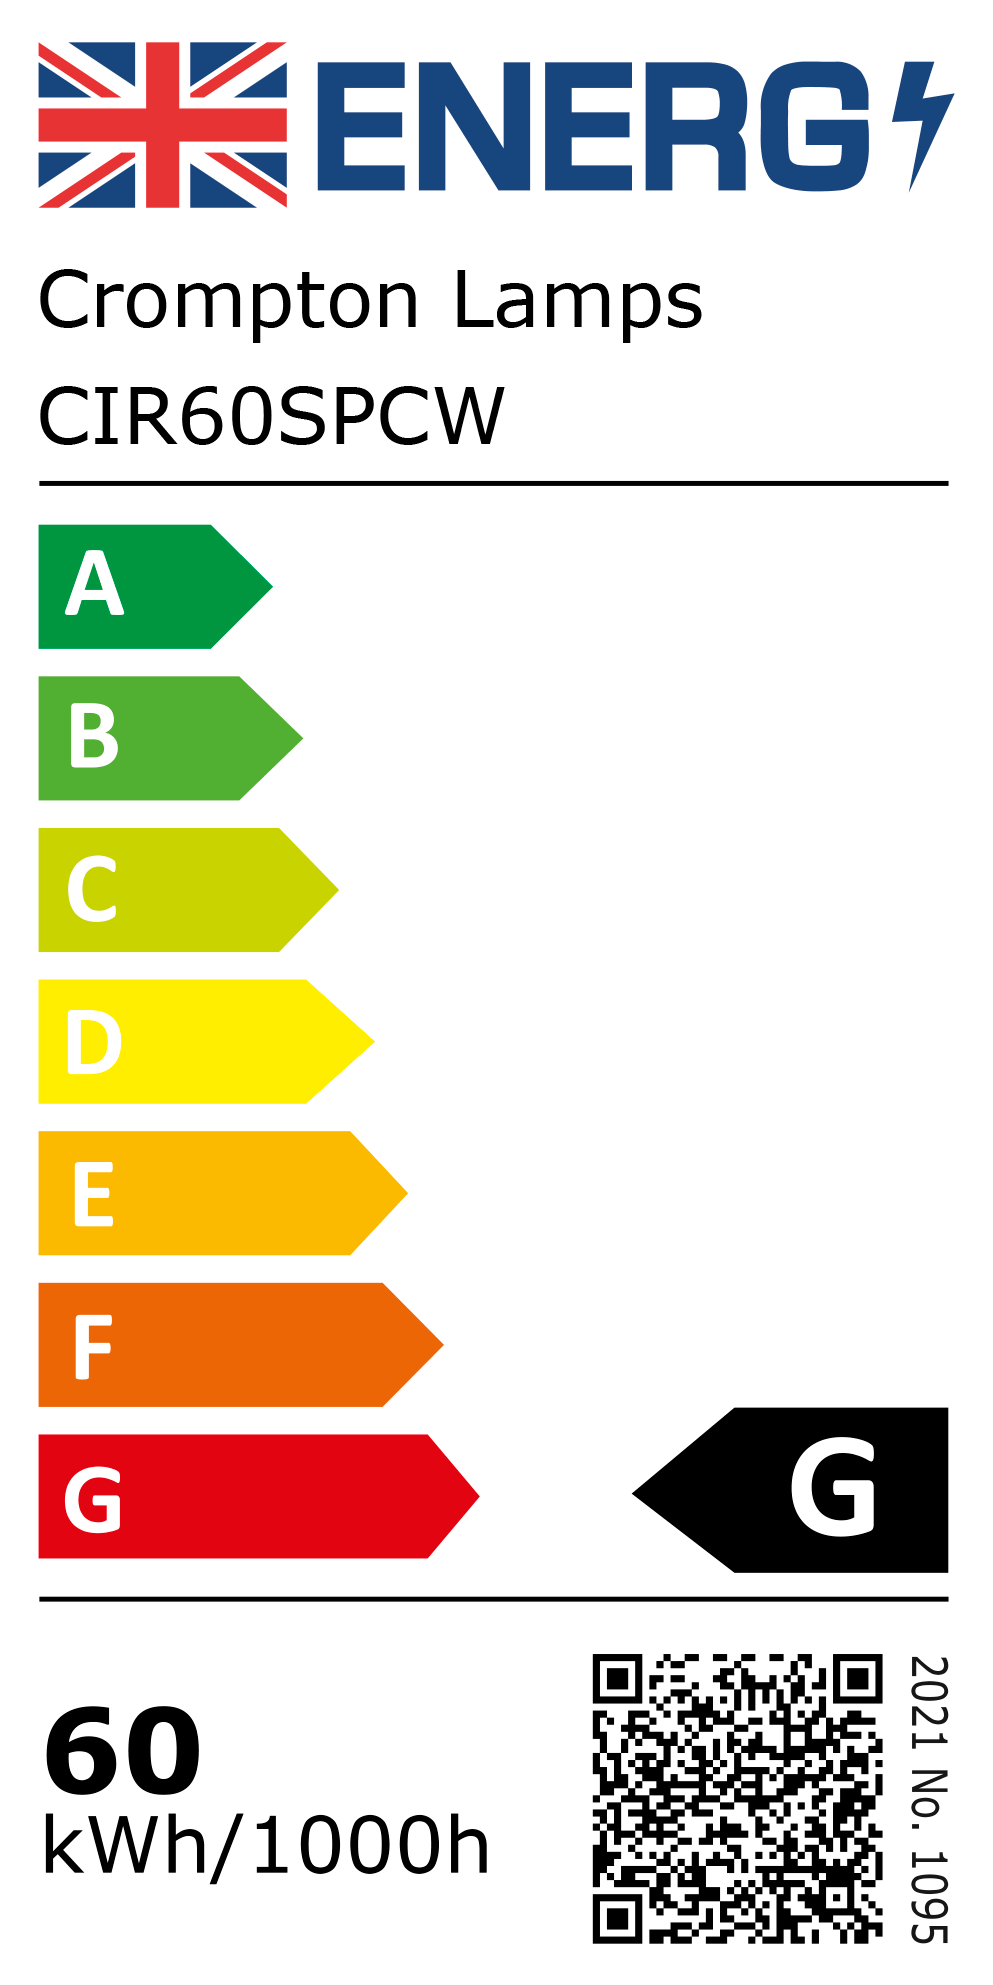 New 2021 Energy Rating Label: Stock Code CIR60SPCW